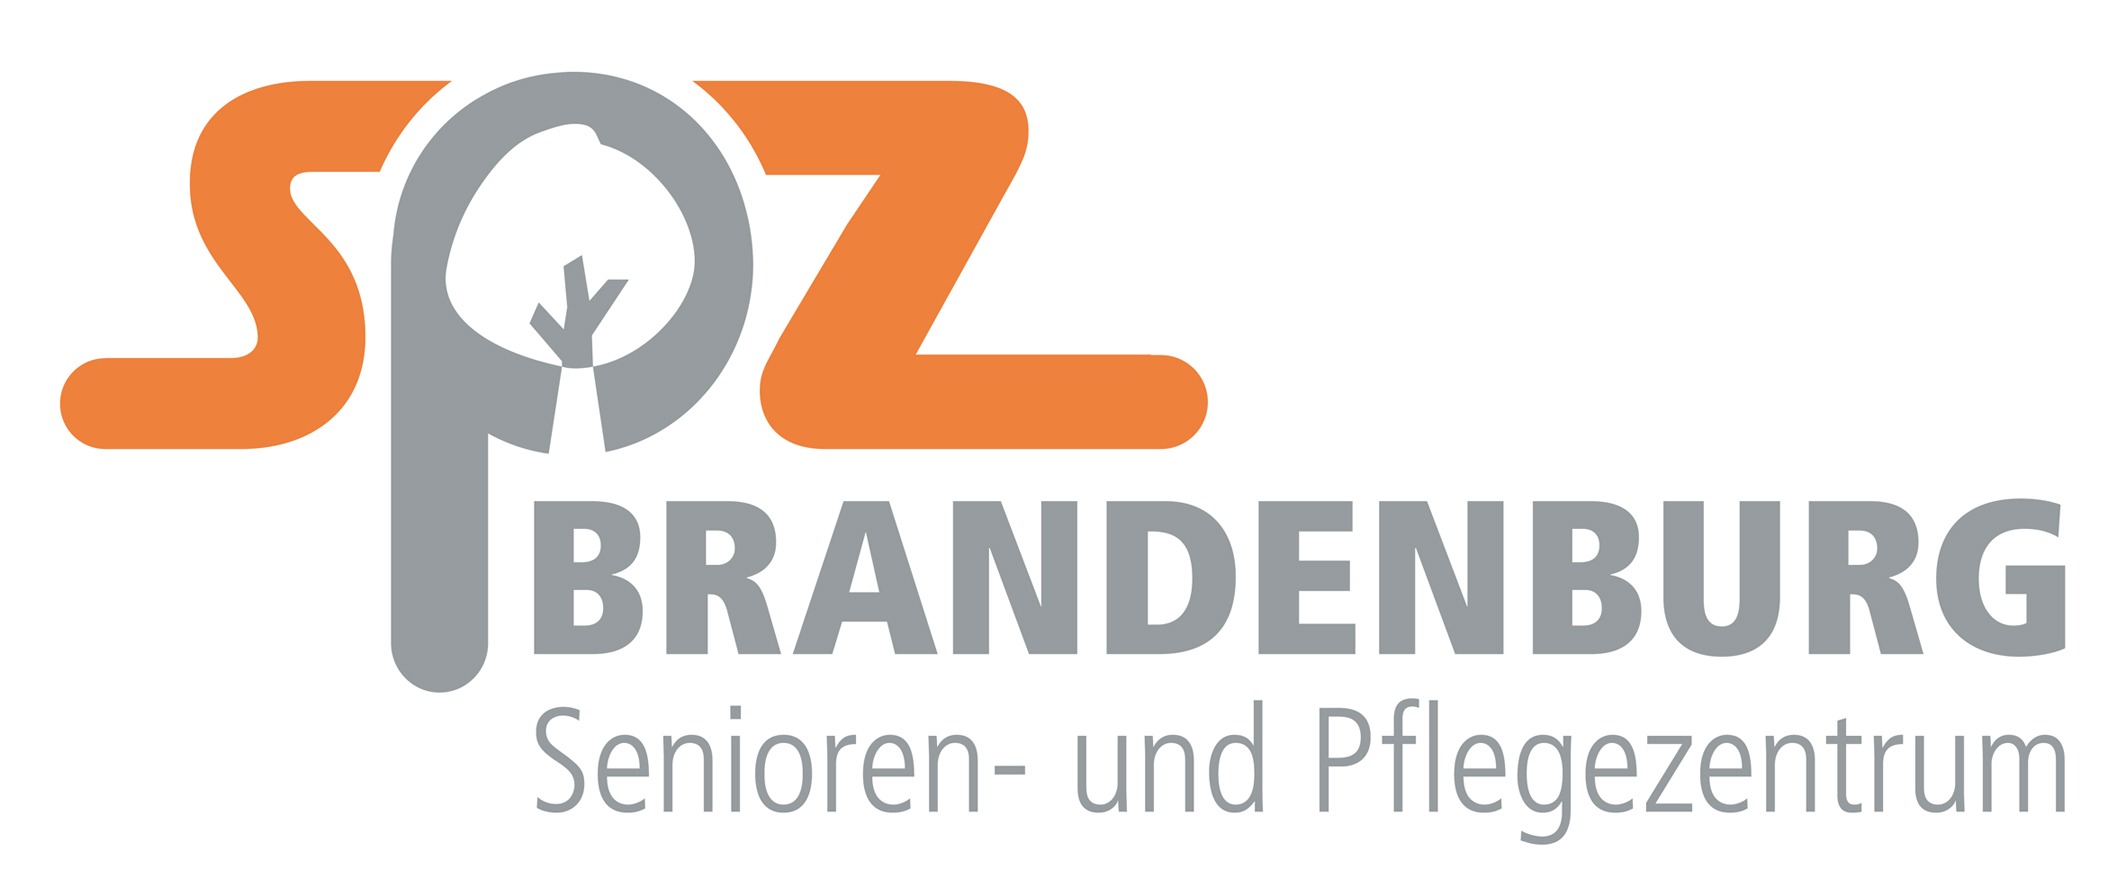 Logo SPZ Brandenburg